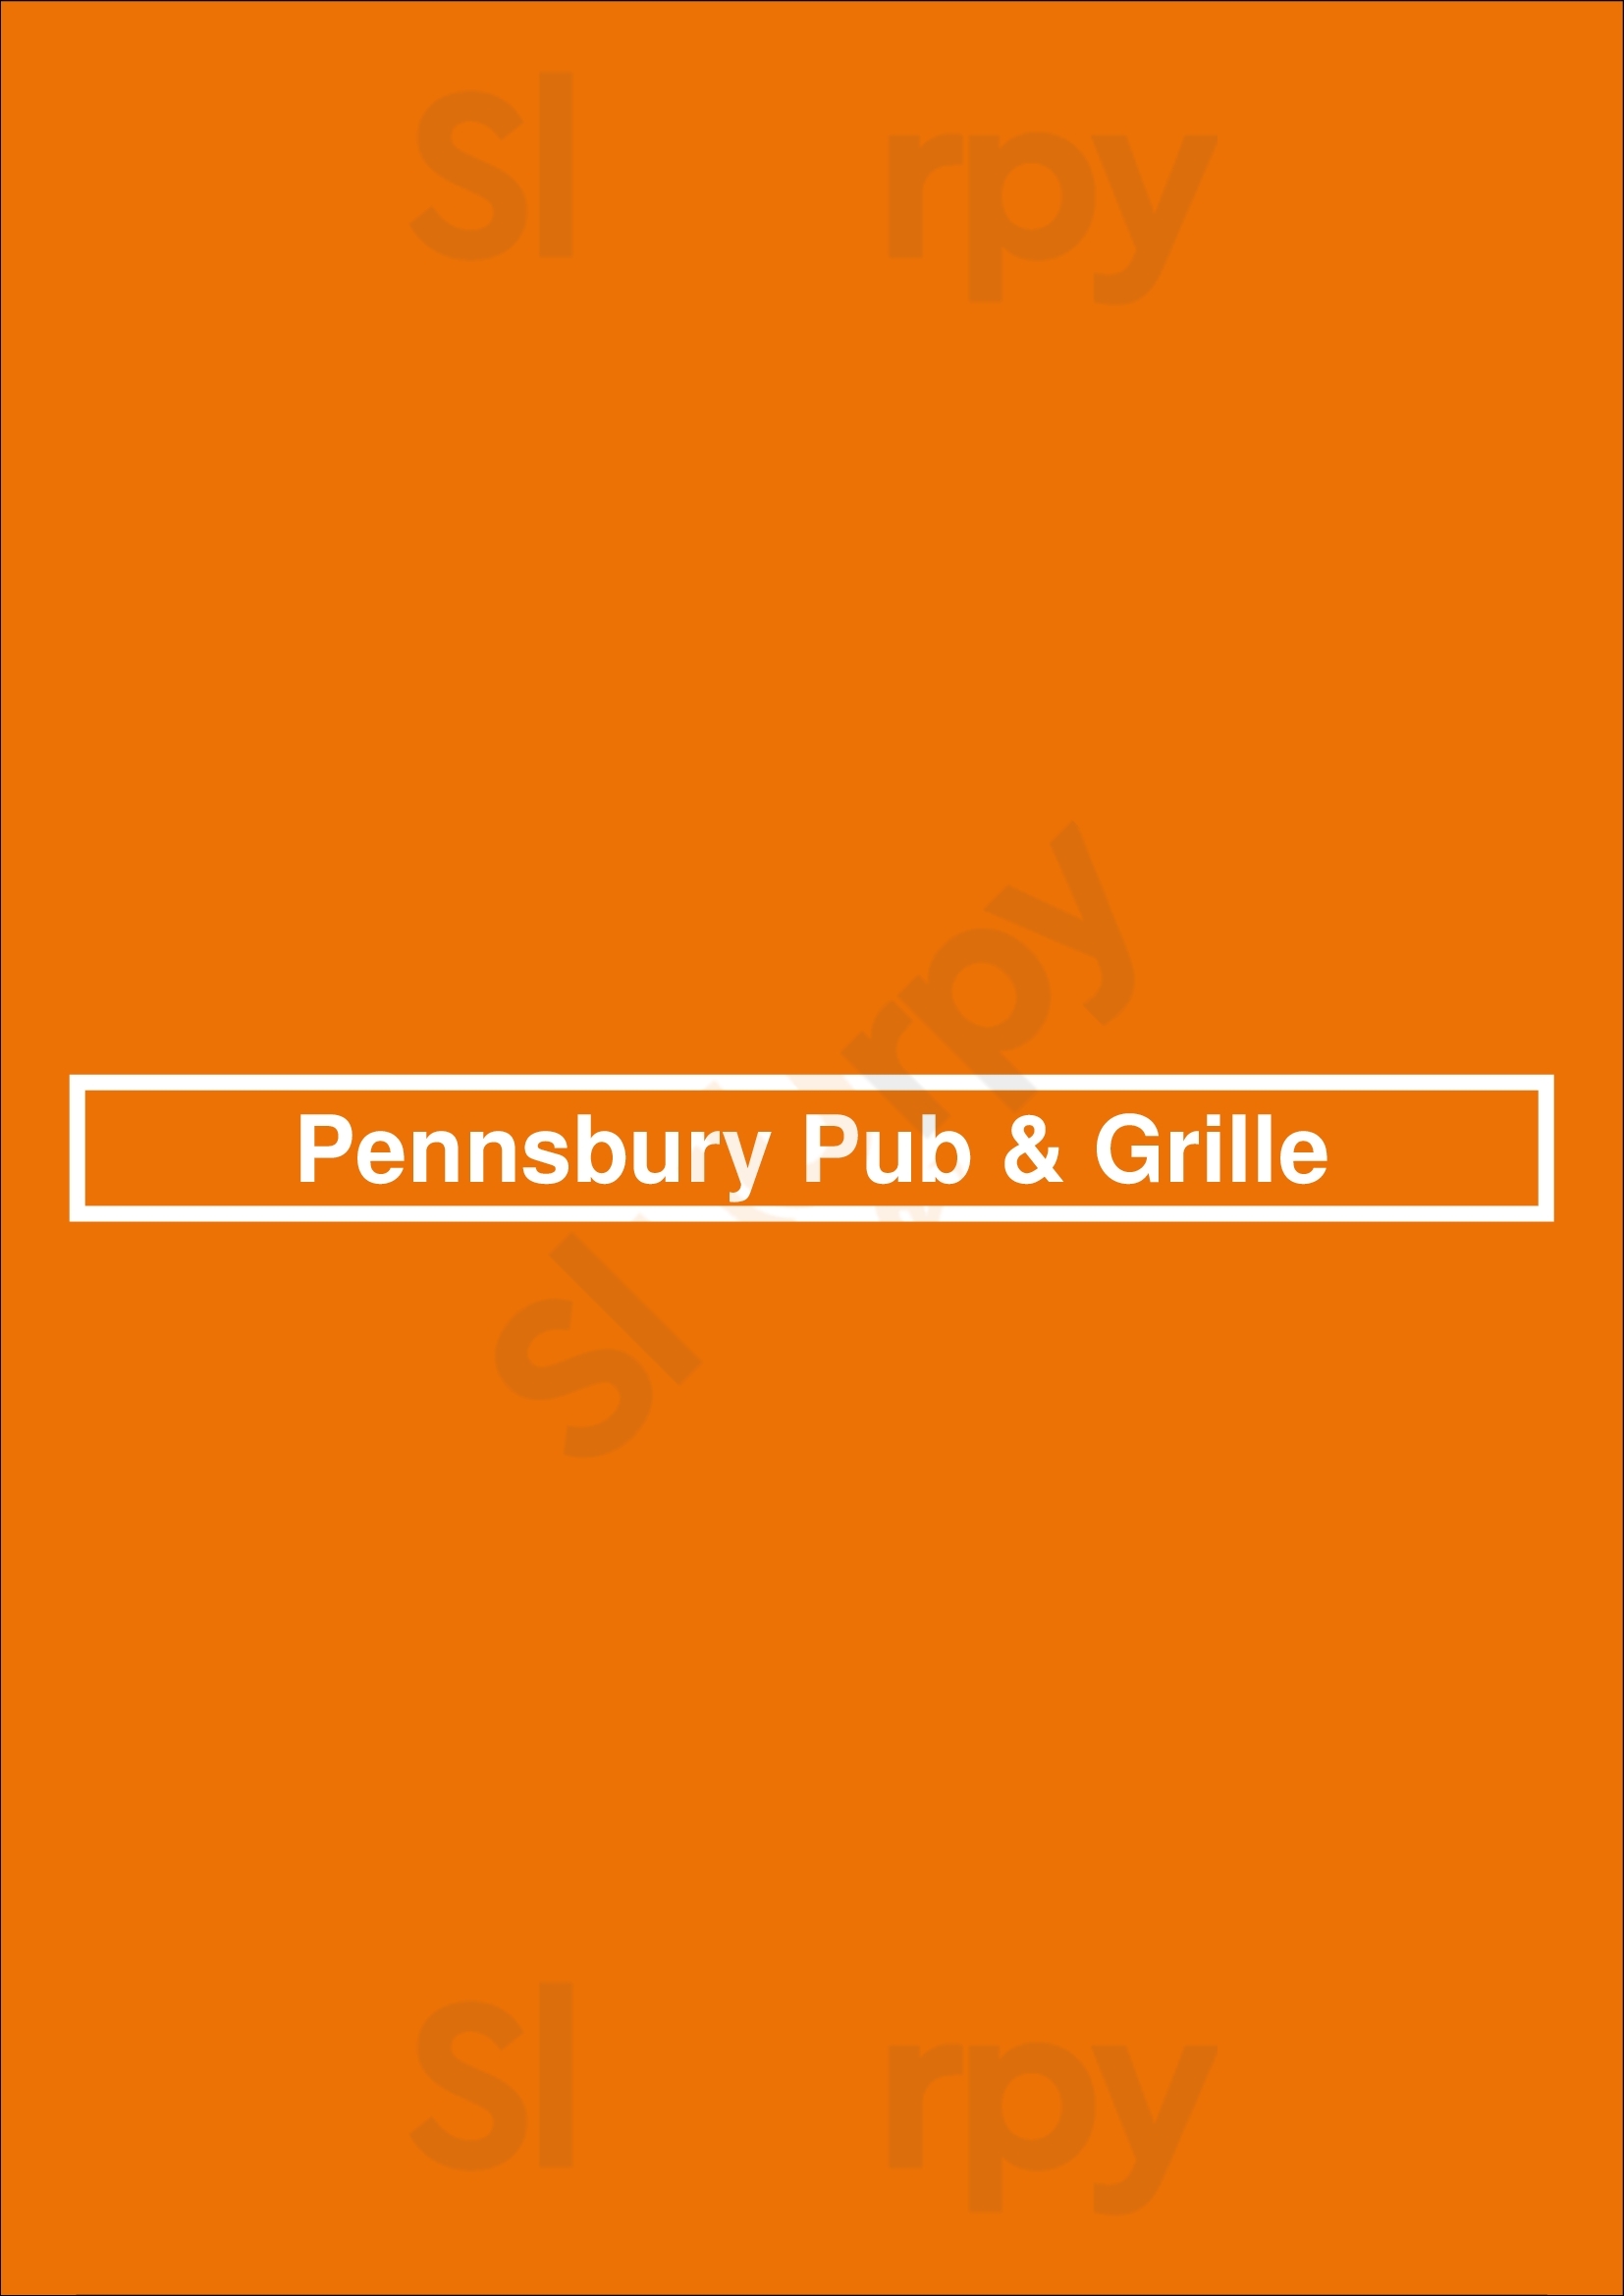 Pennsbury Pub & Grille Pittsburgh Menu - 1